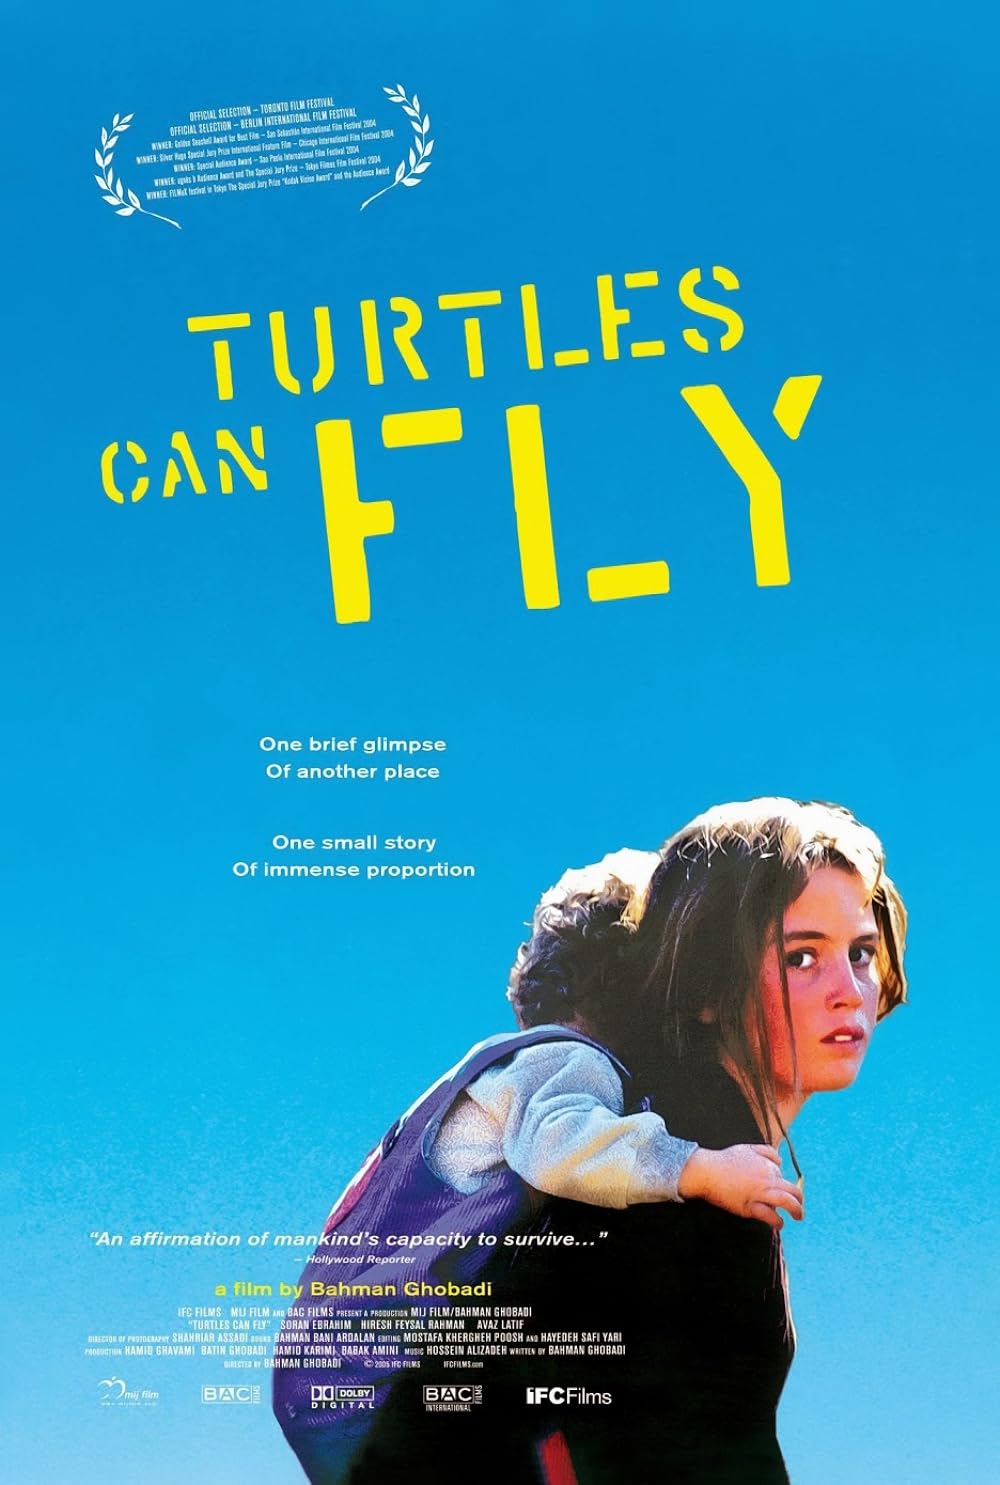 Turtles Can Fly ( Lakposhtha parvaz mikonand )